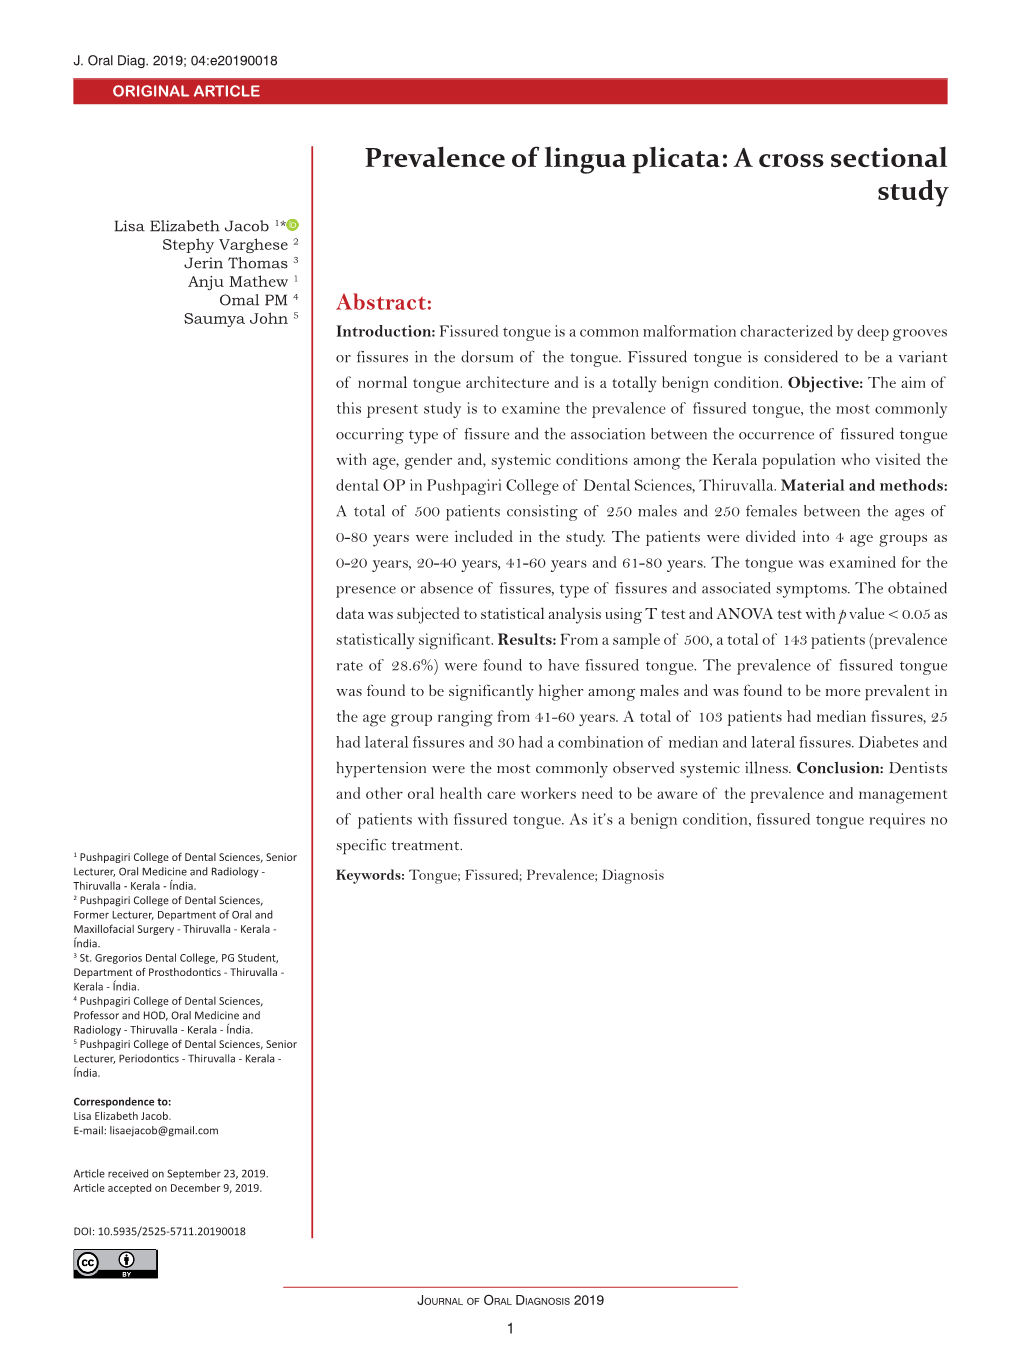 Prevalence of Lingua Plicata: a Cross Sectional Study